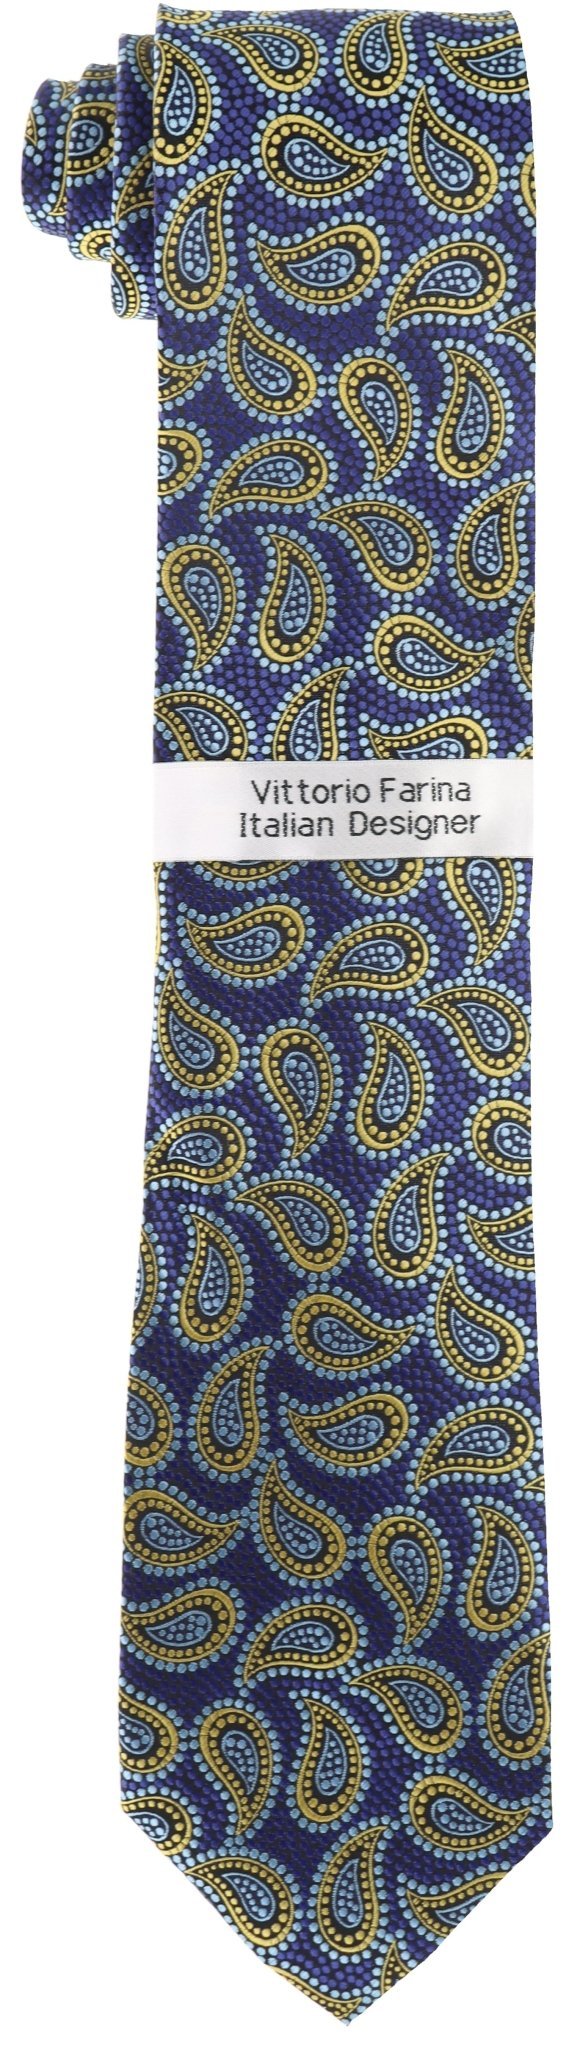 Vittorio Farina Paisley Designer Necktie & Pocket Square - NH-D-1094 - Classy Cufflinks